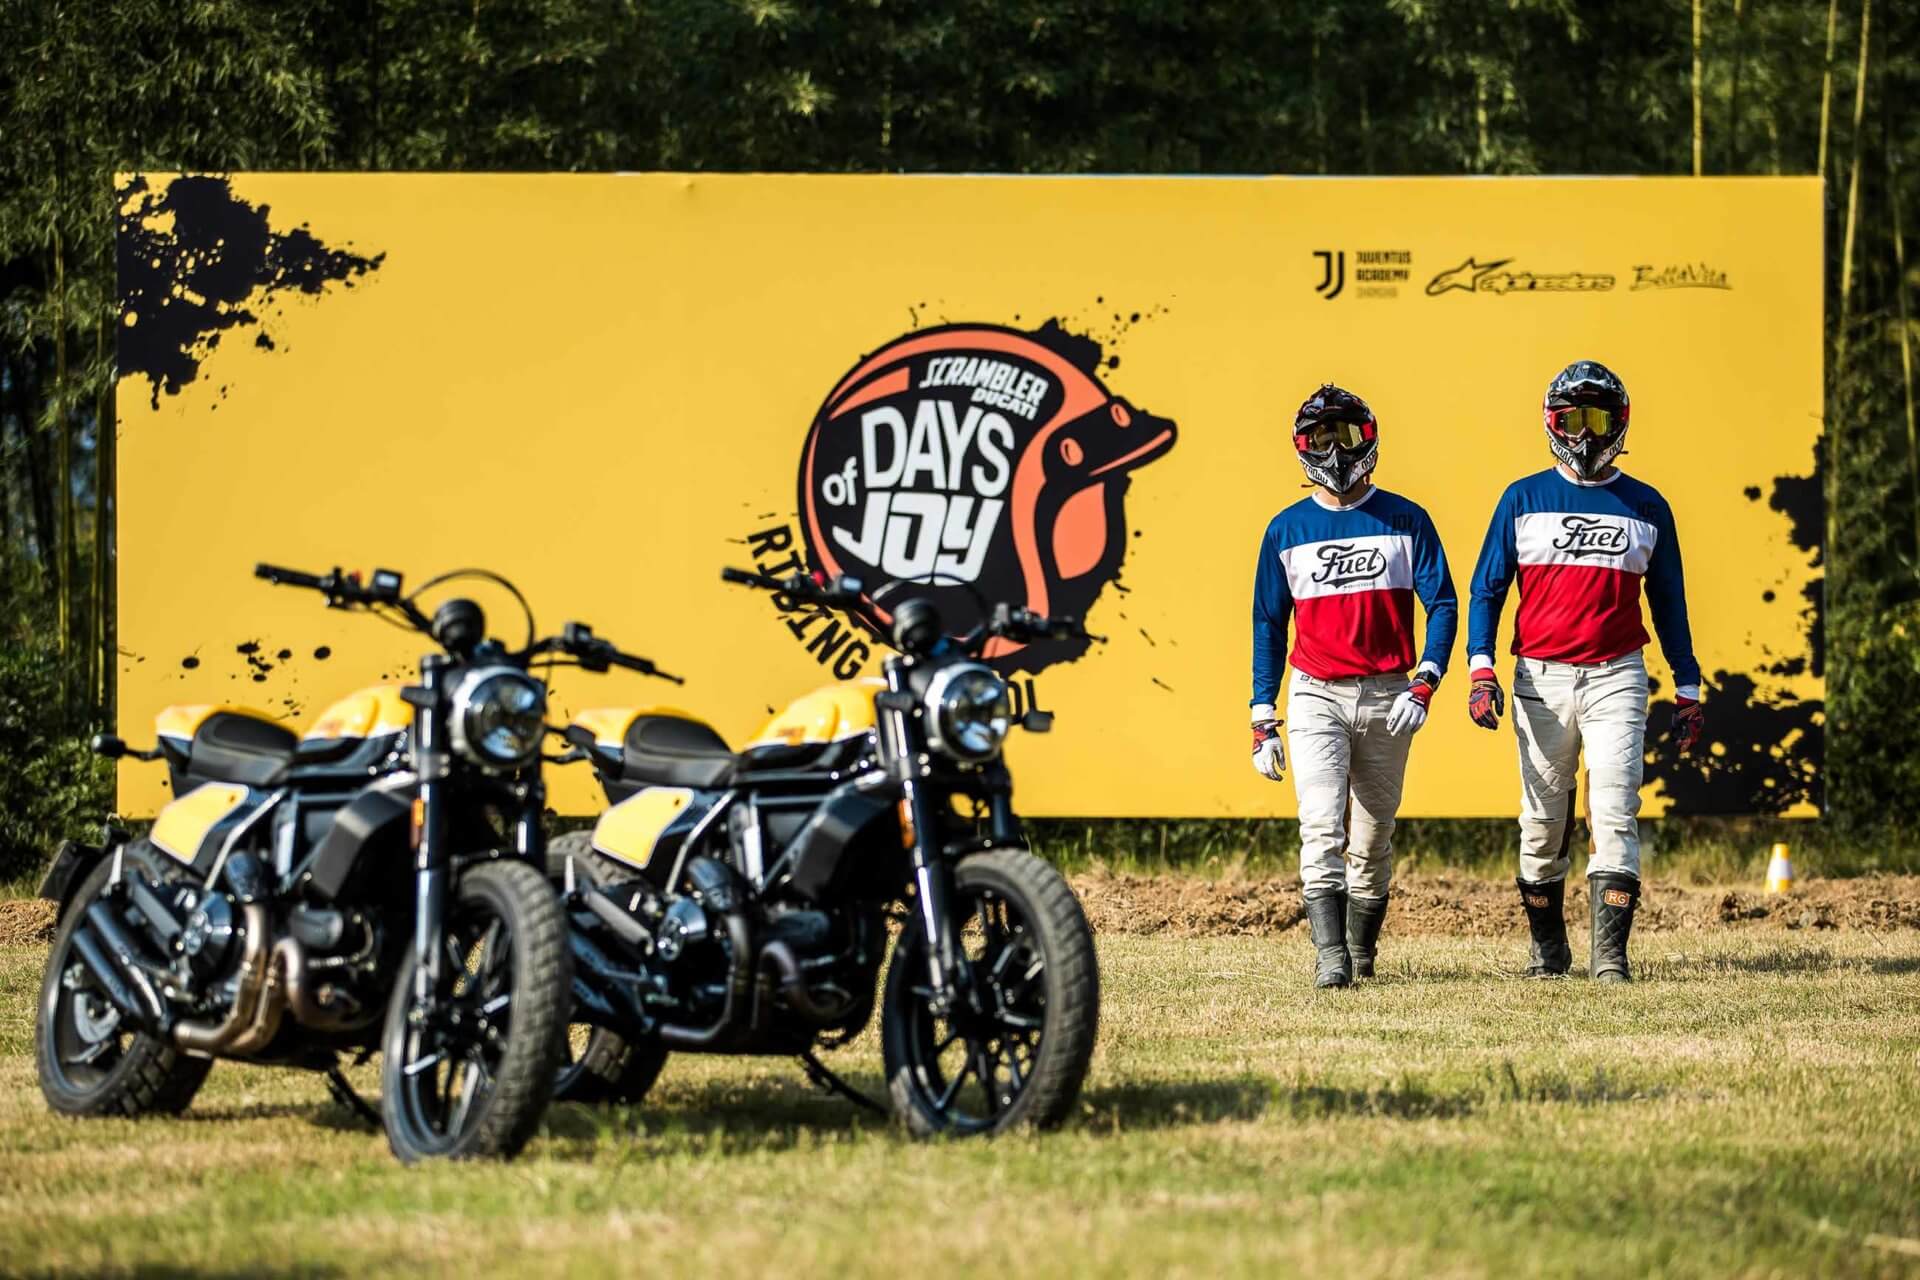 Ducati Scrambler “Days of Joy” Riding School